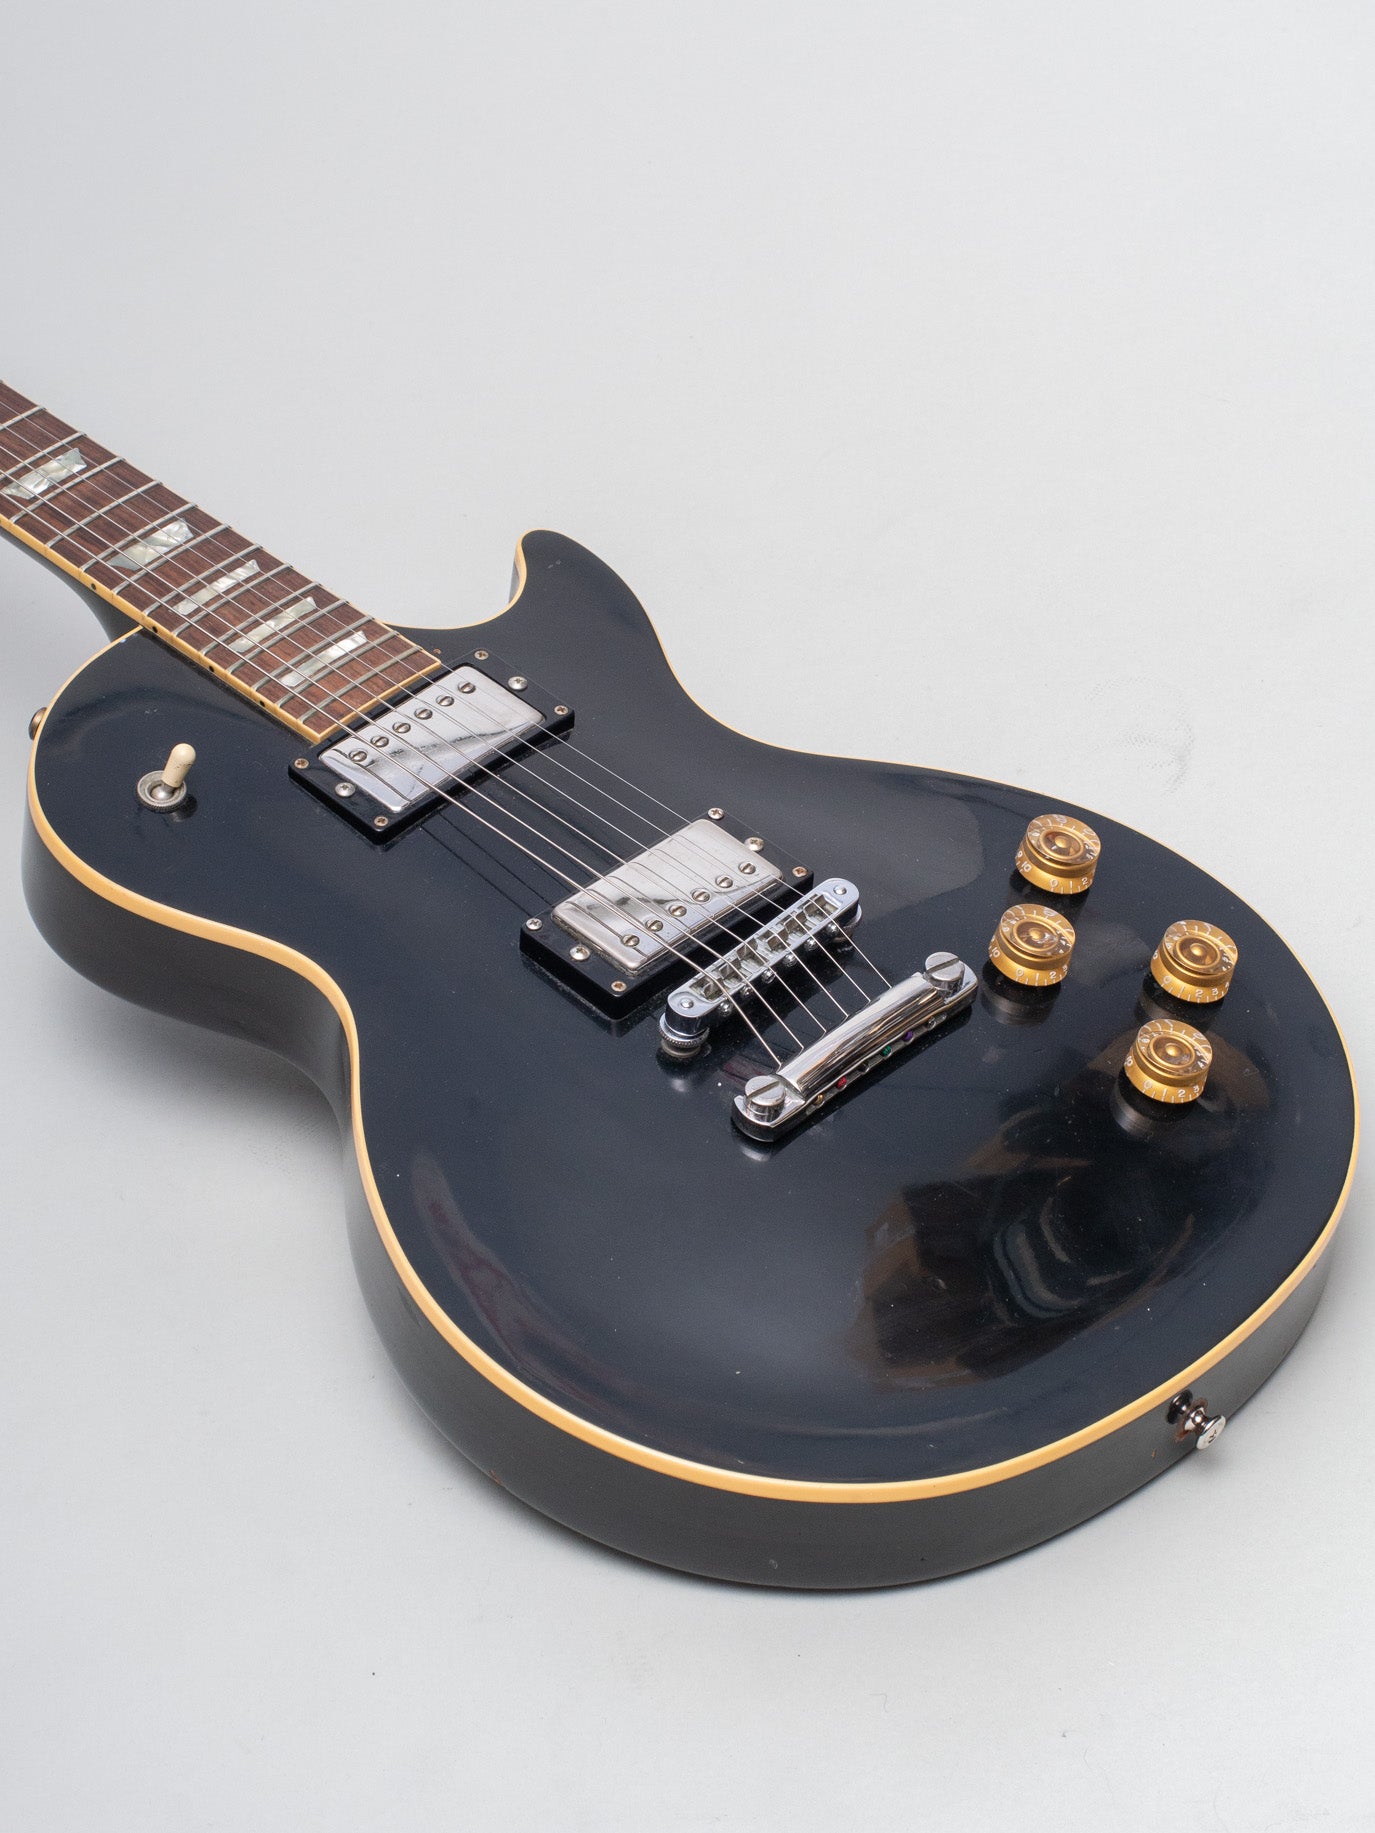 1989 Gibson Les Paul Standard